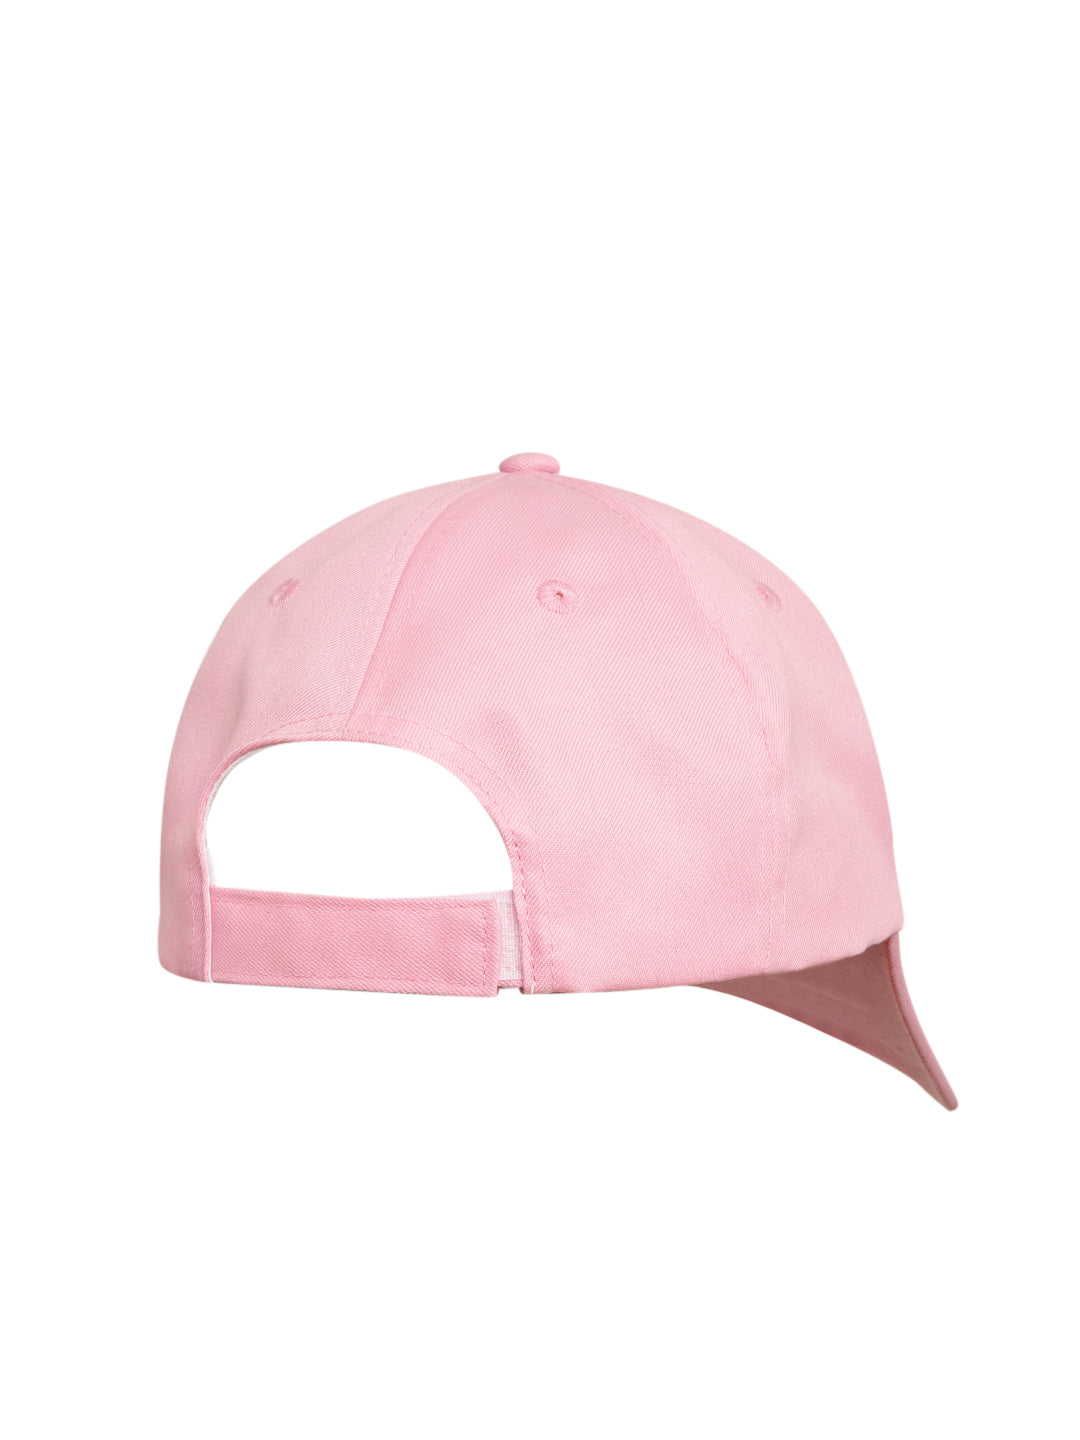 Blueberry pink GRL PWR baseball cap